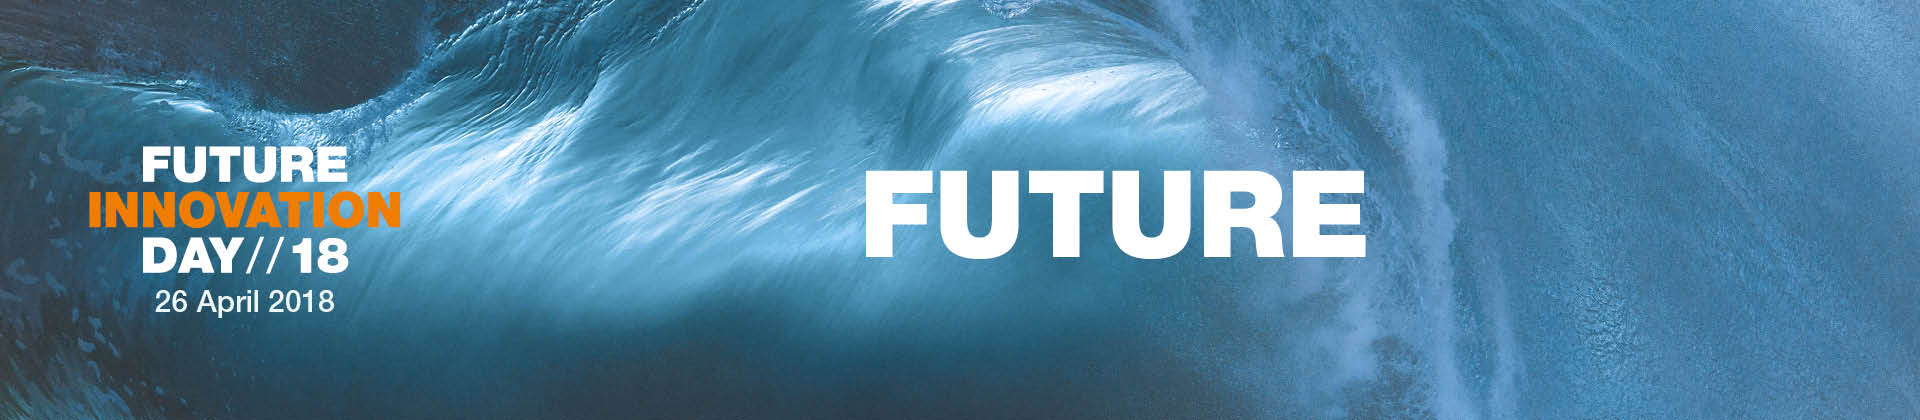 Future Innovation Project - FUTURE